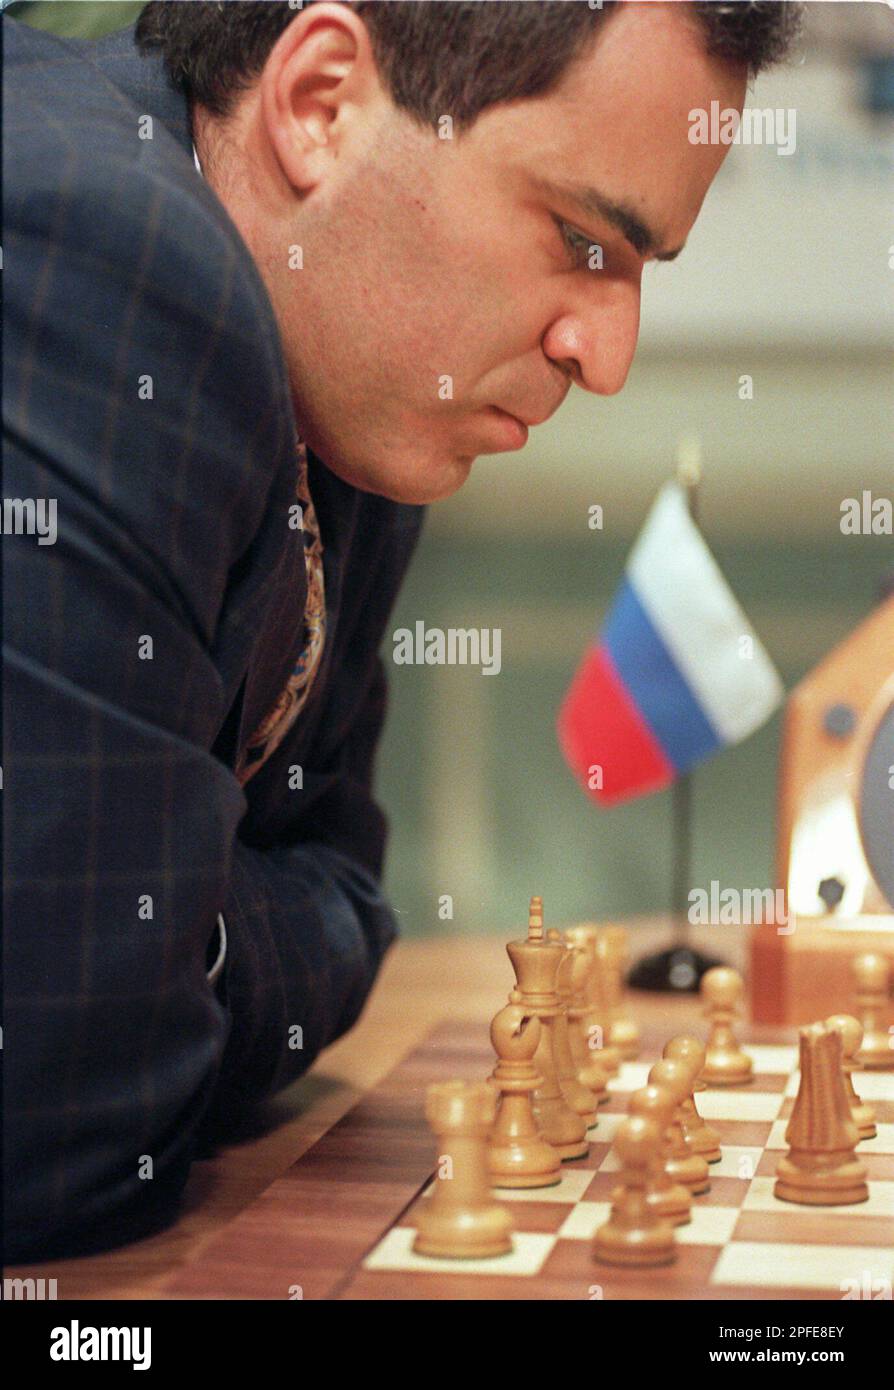 World Chess Champion Garry Kasparov